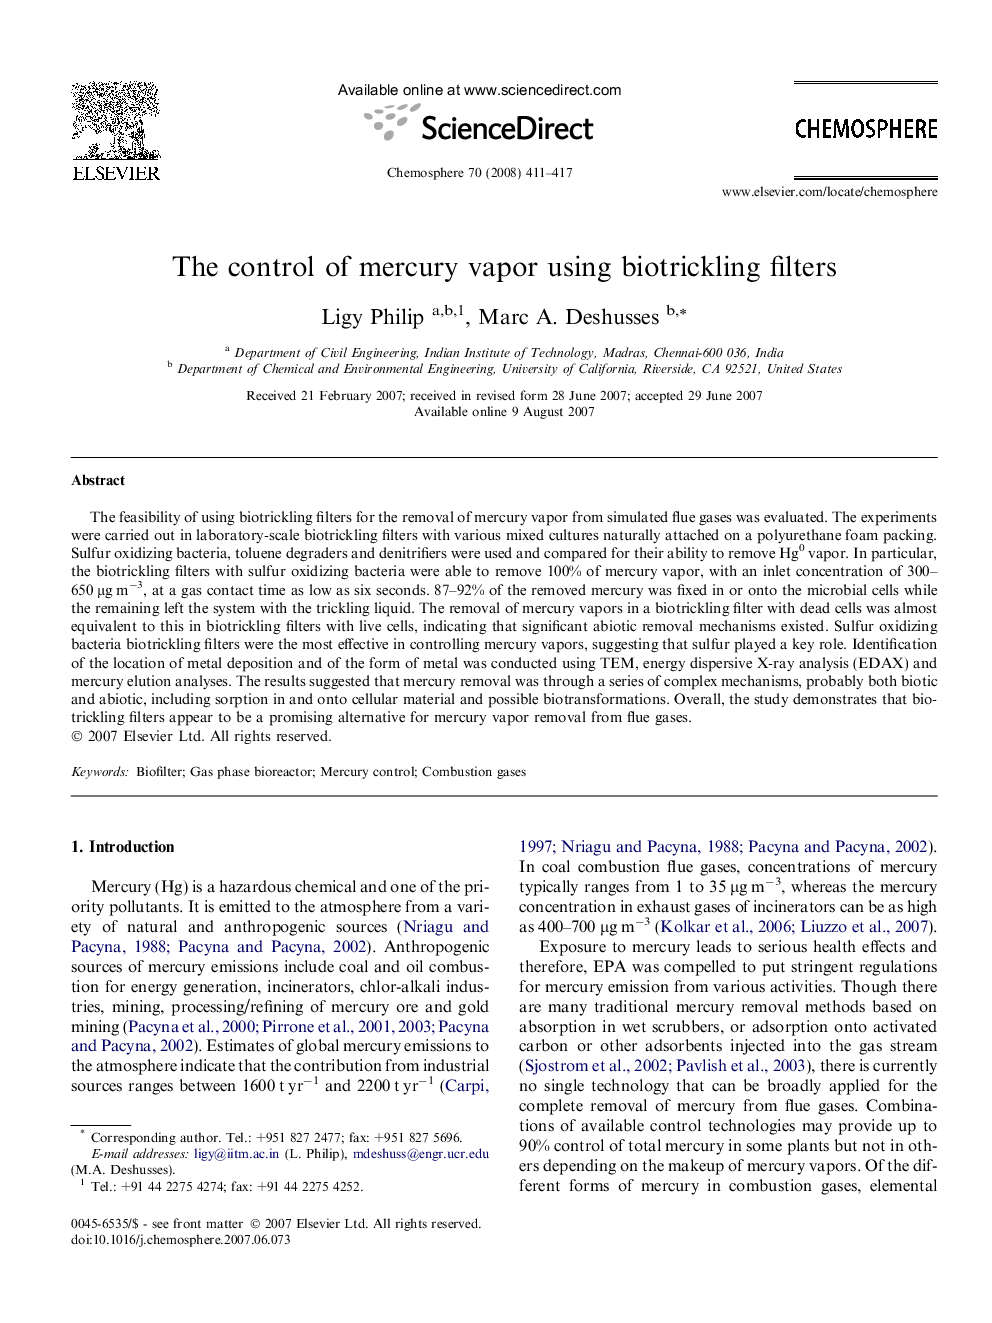 The control of mercury vapor using biotrickling filters